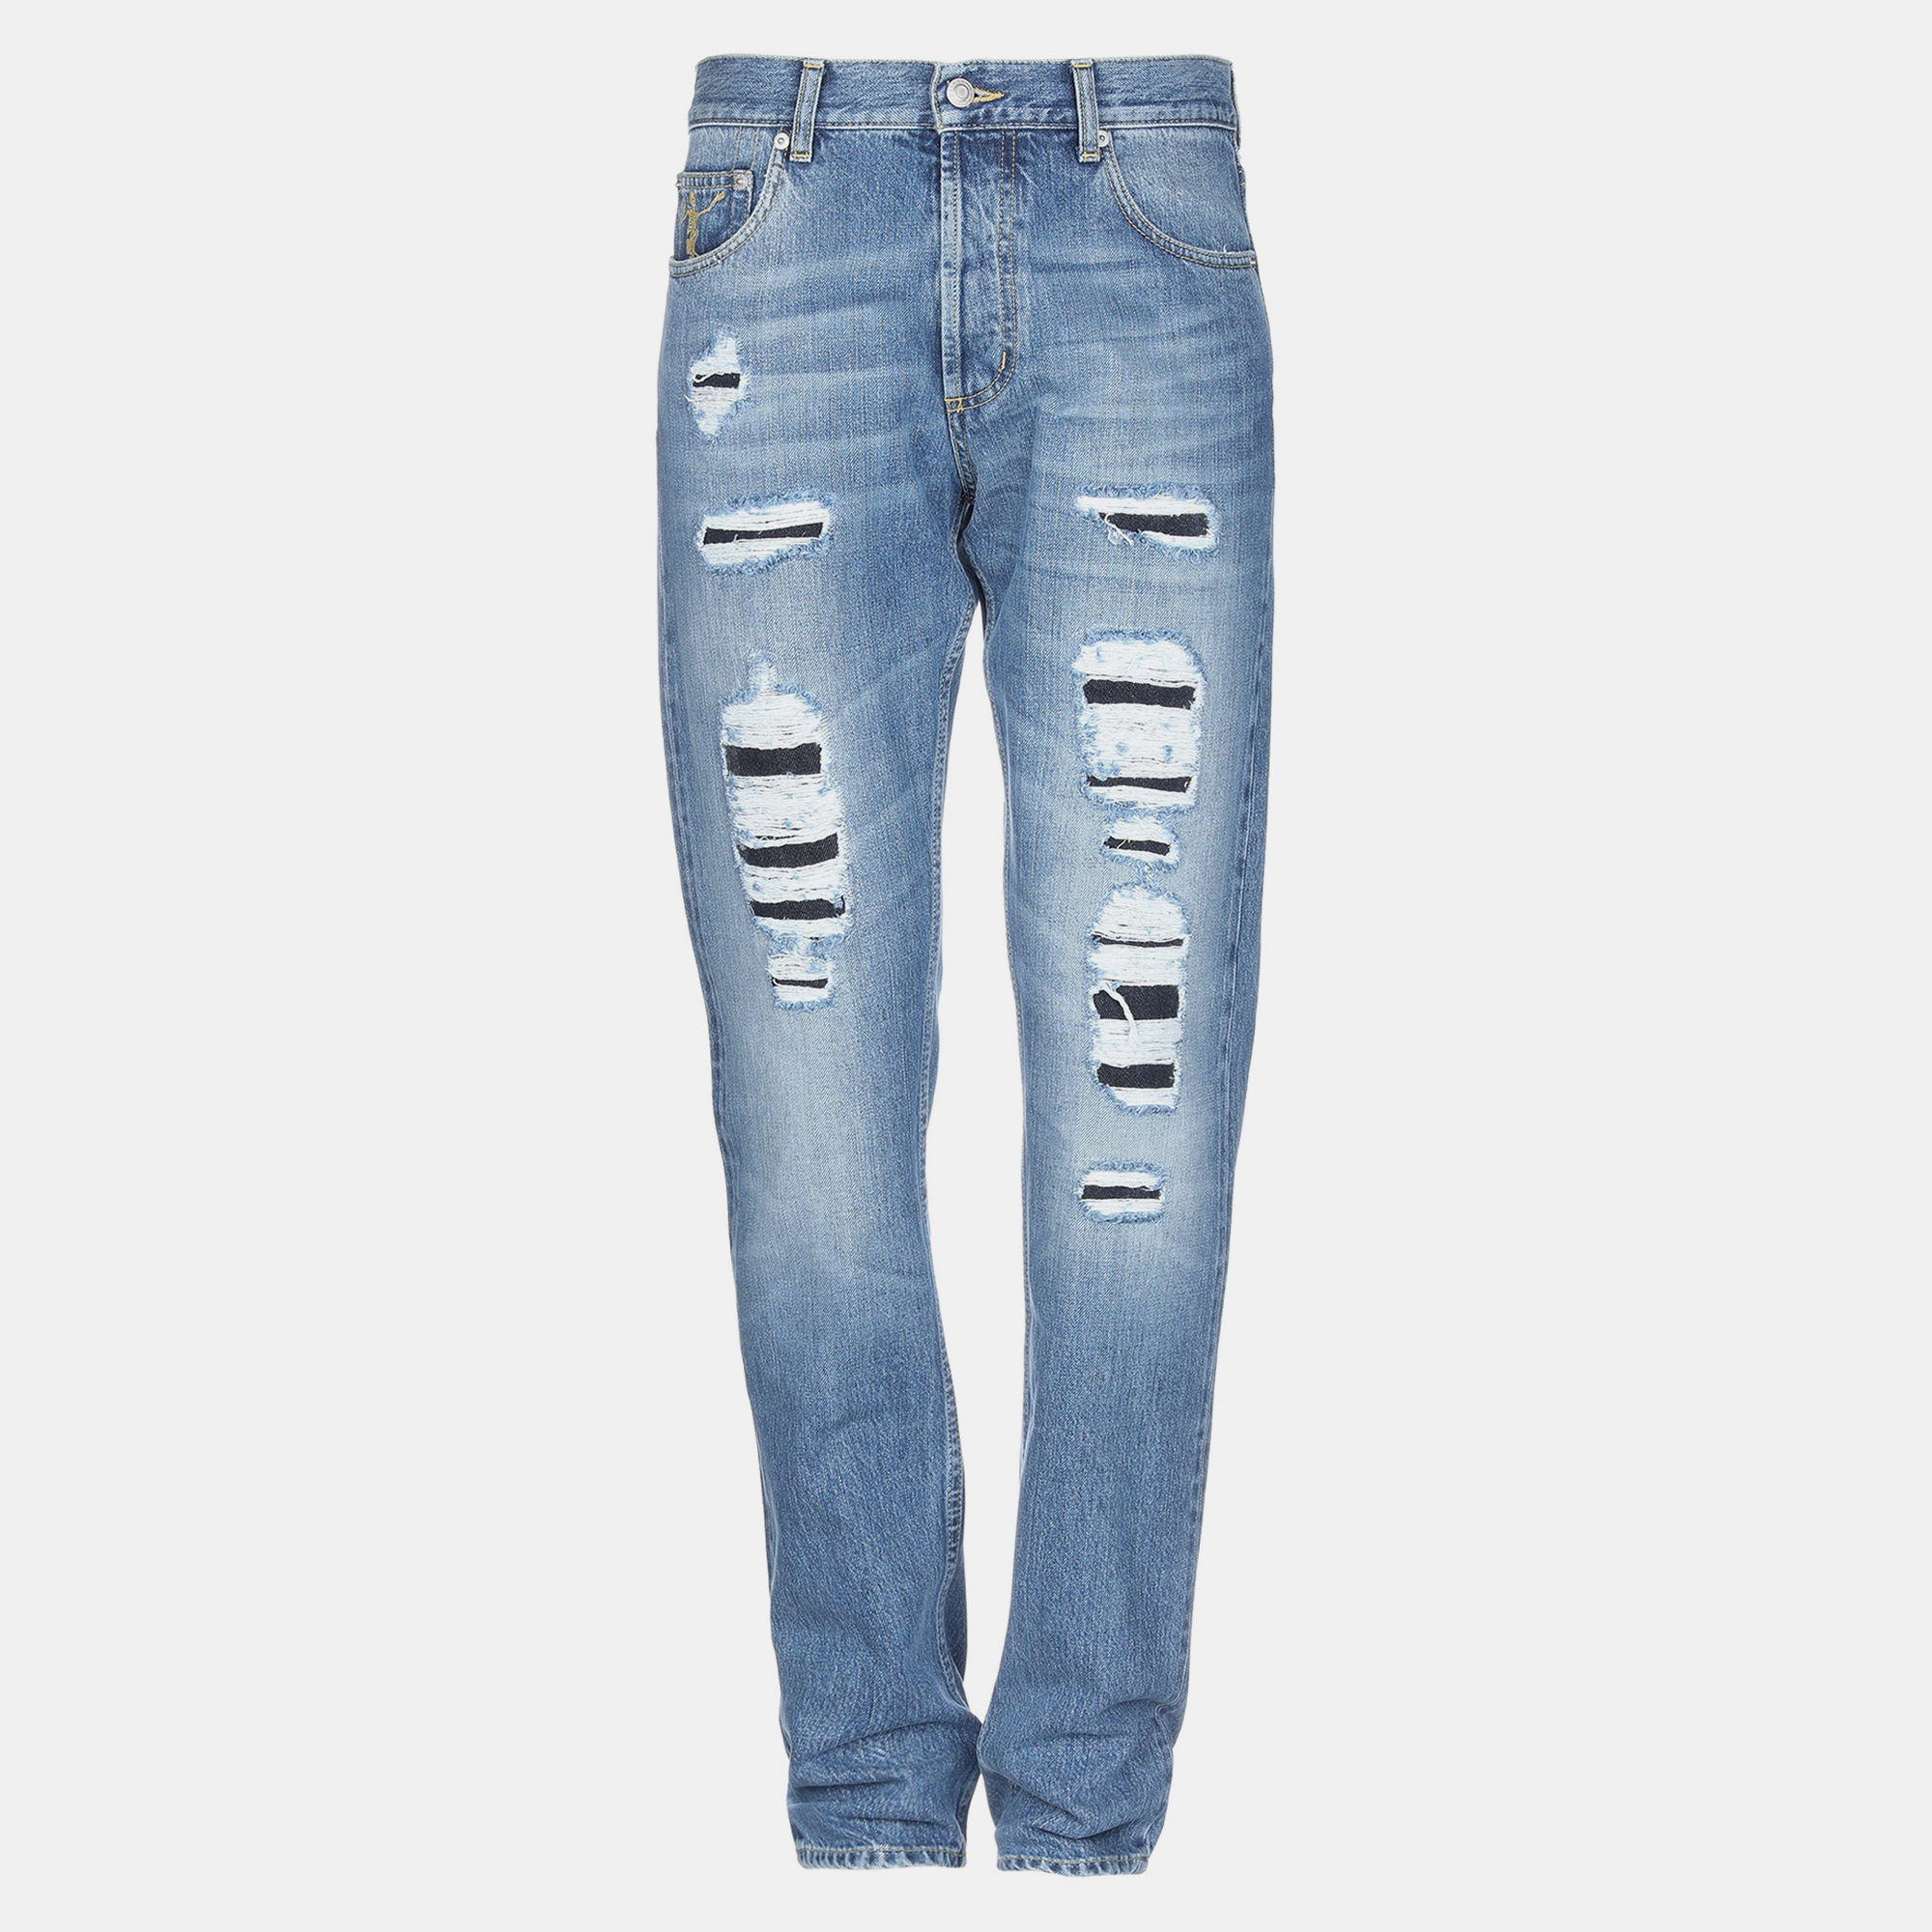 Alexander mcqueen cotton jeans 46